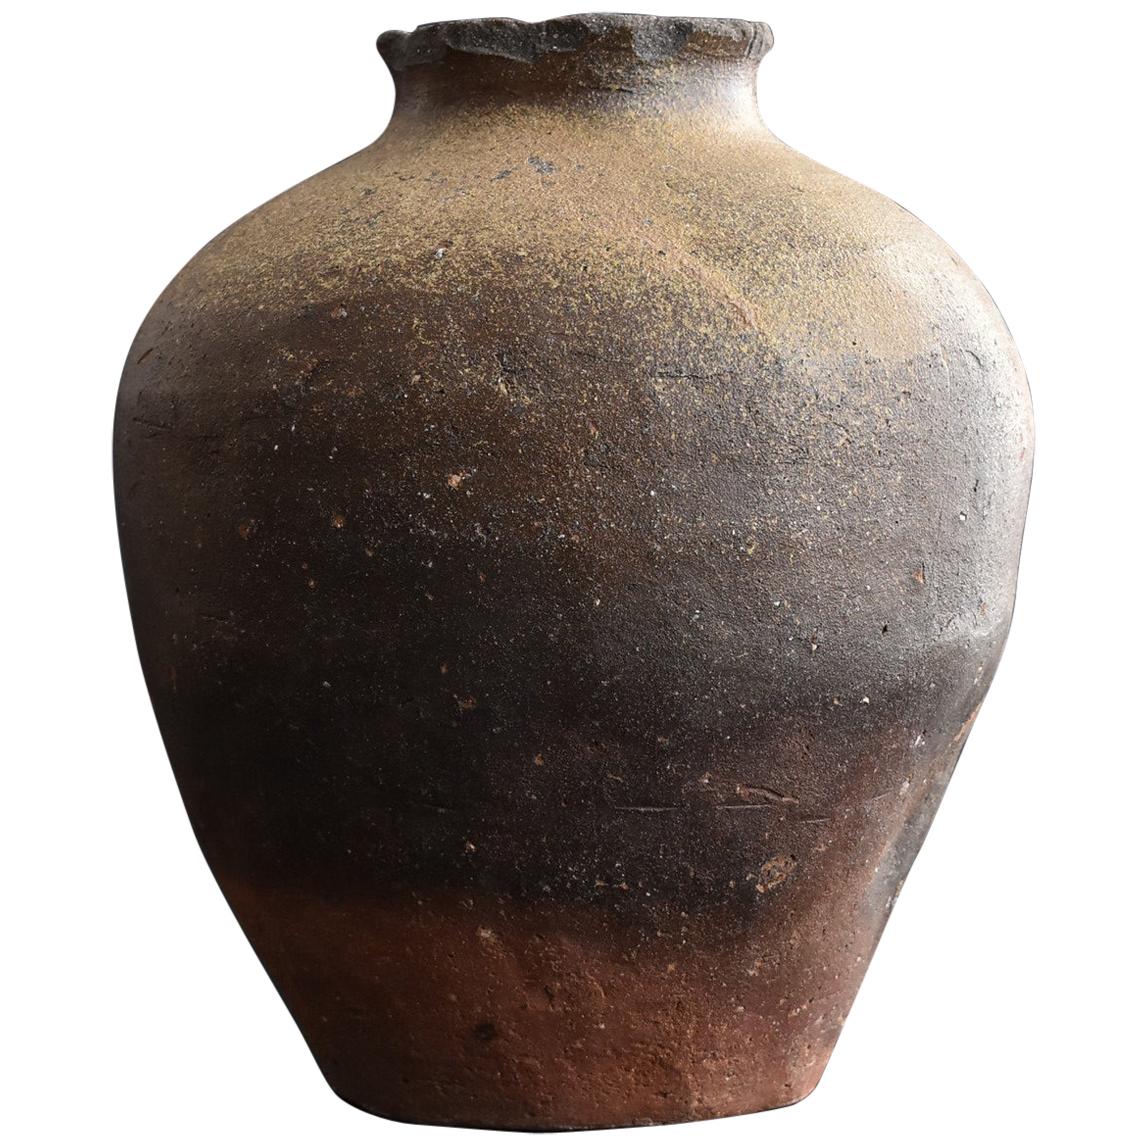 Japanese Antique Pottery "Tokoname" Jar / Old Vase / Around the 16th Century